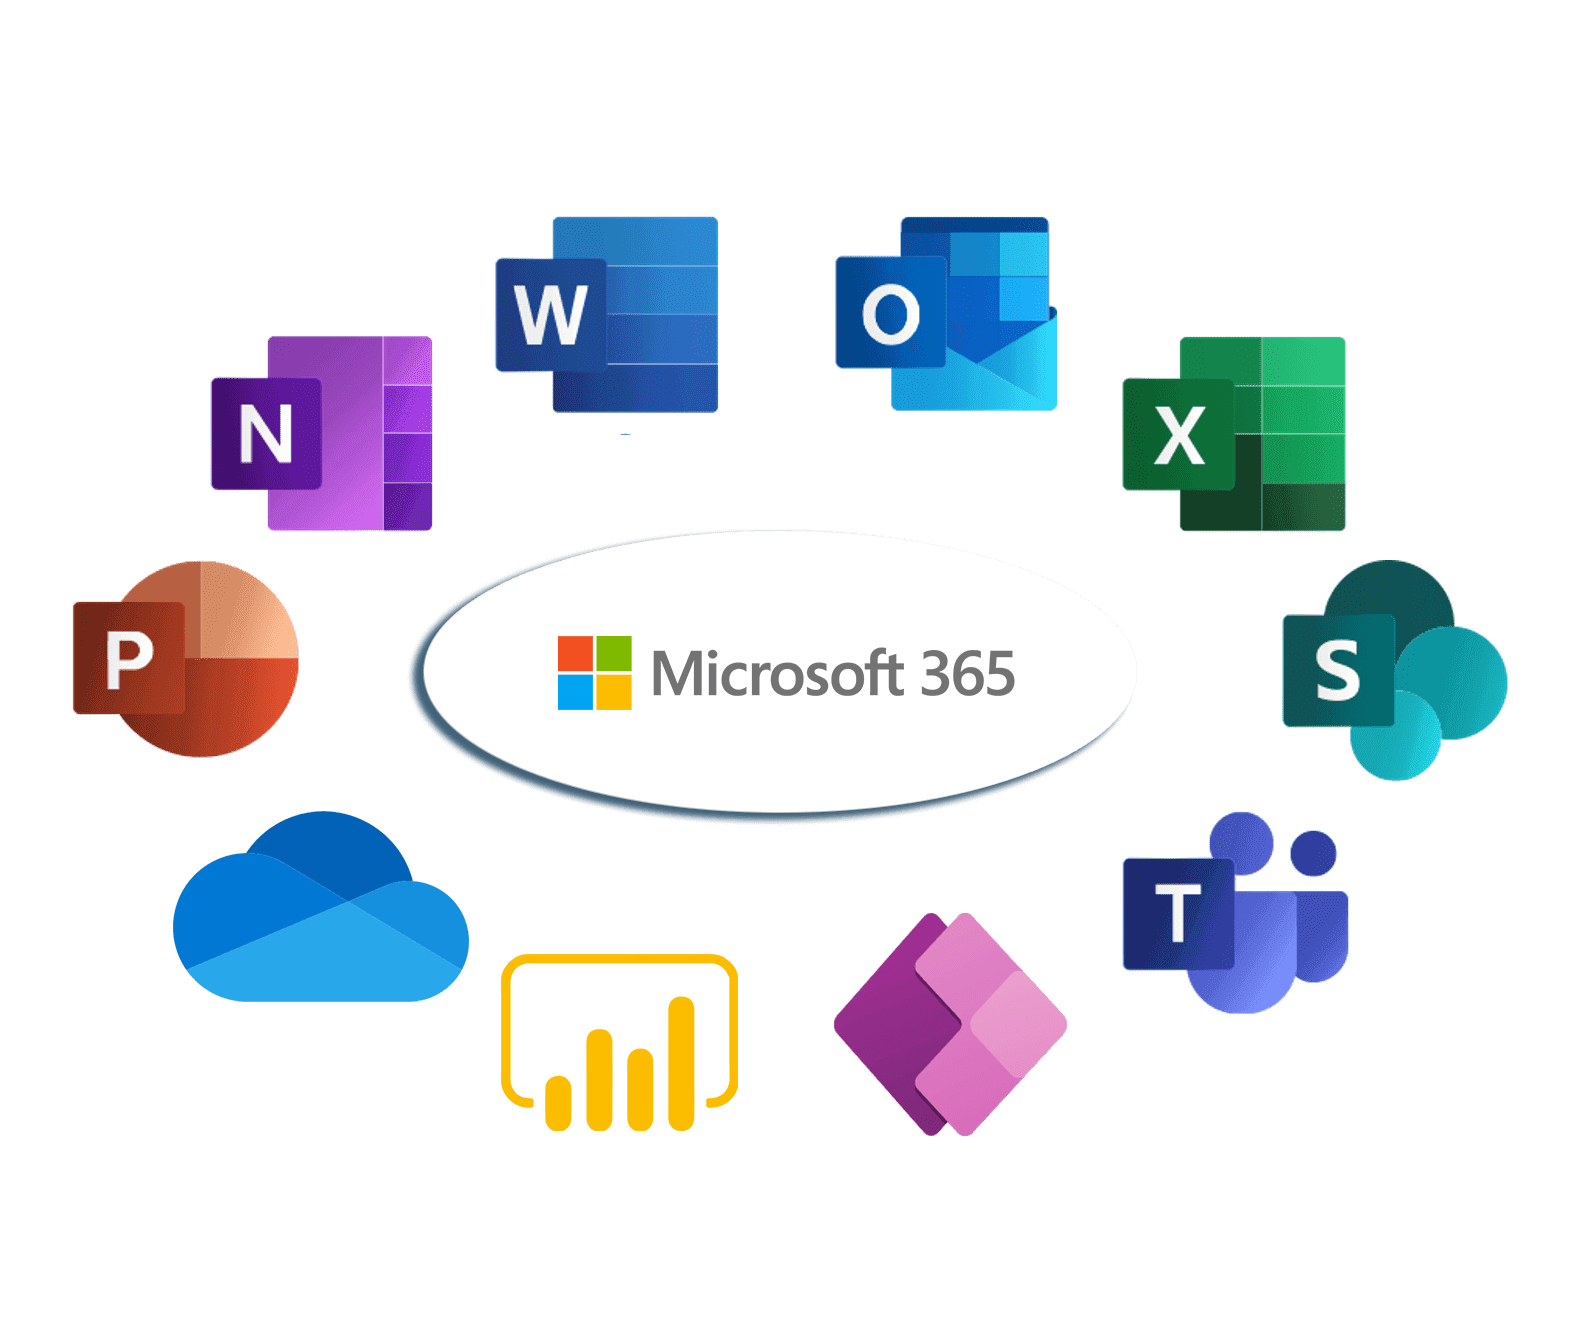 Microsoft 365 - Teroxlab